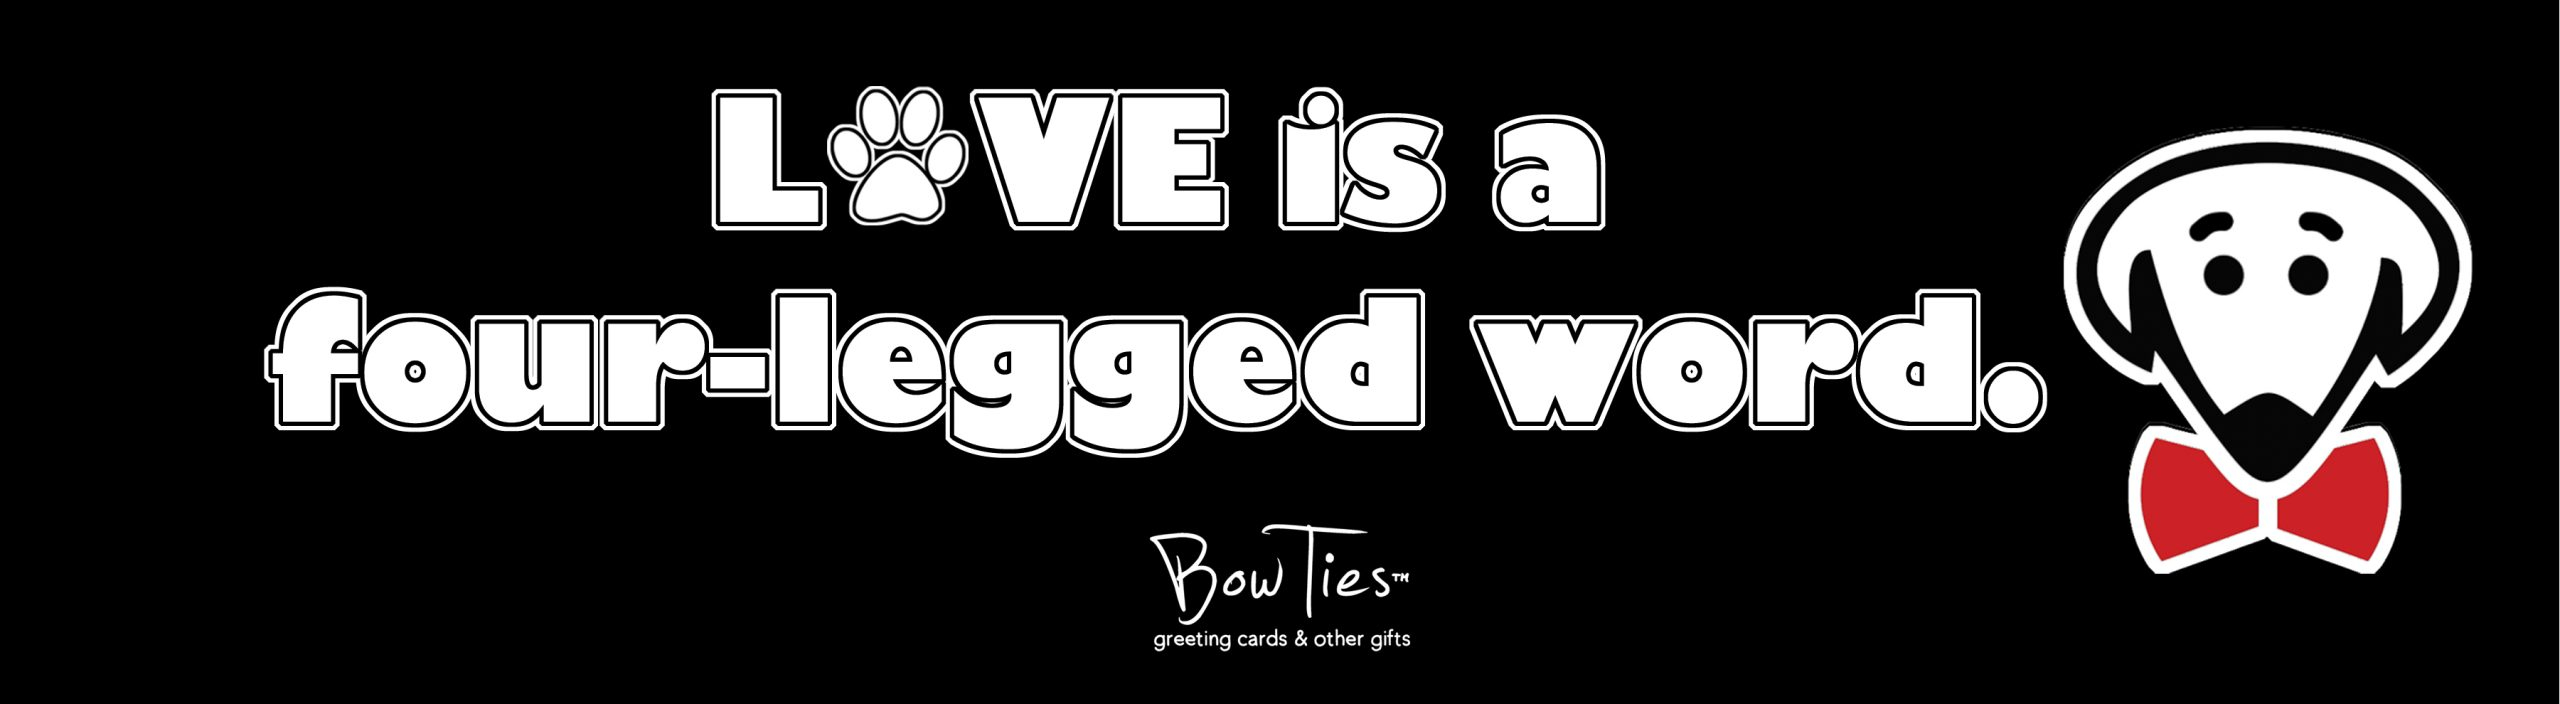 Love is a four-legged word. – sticker